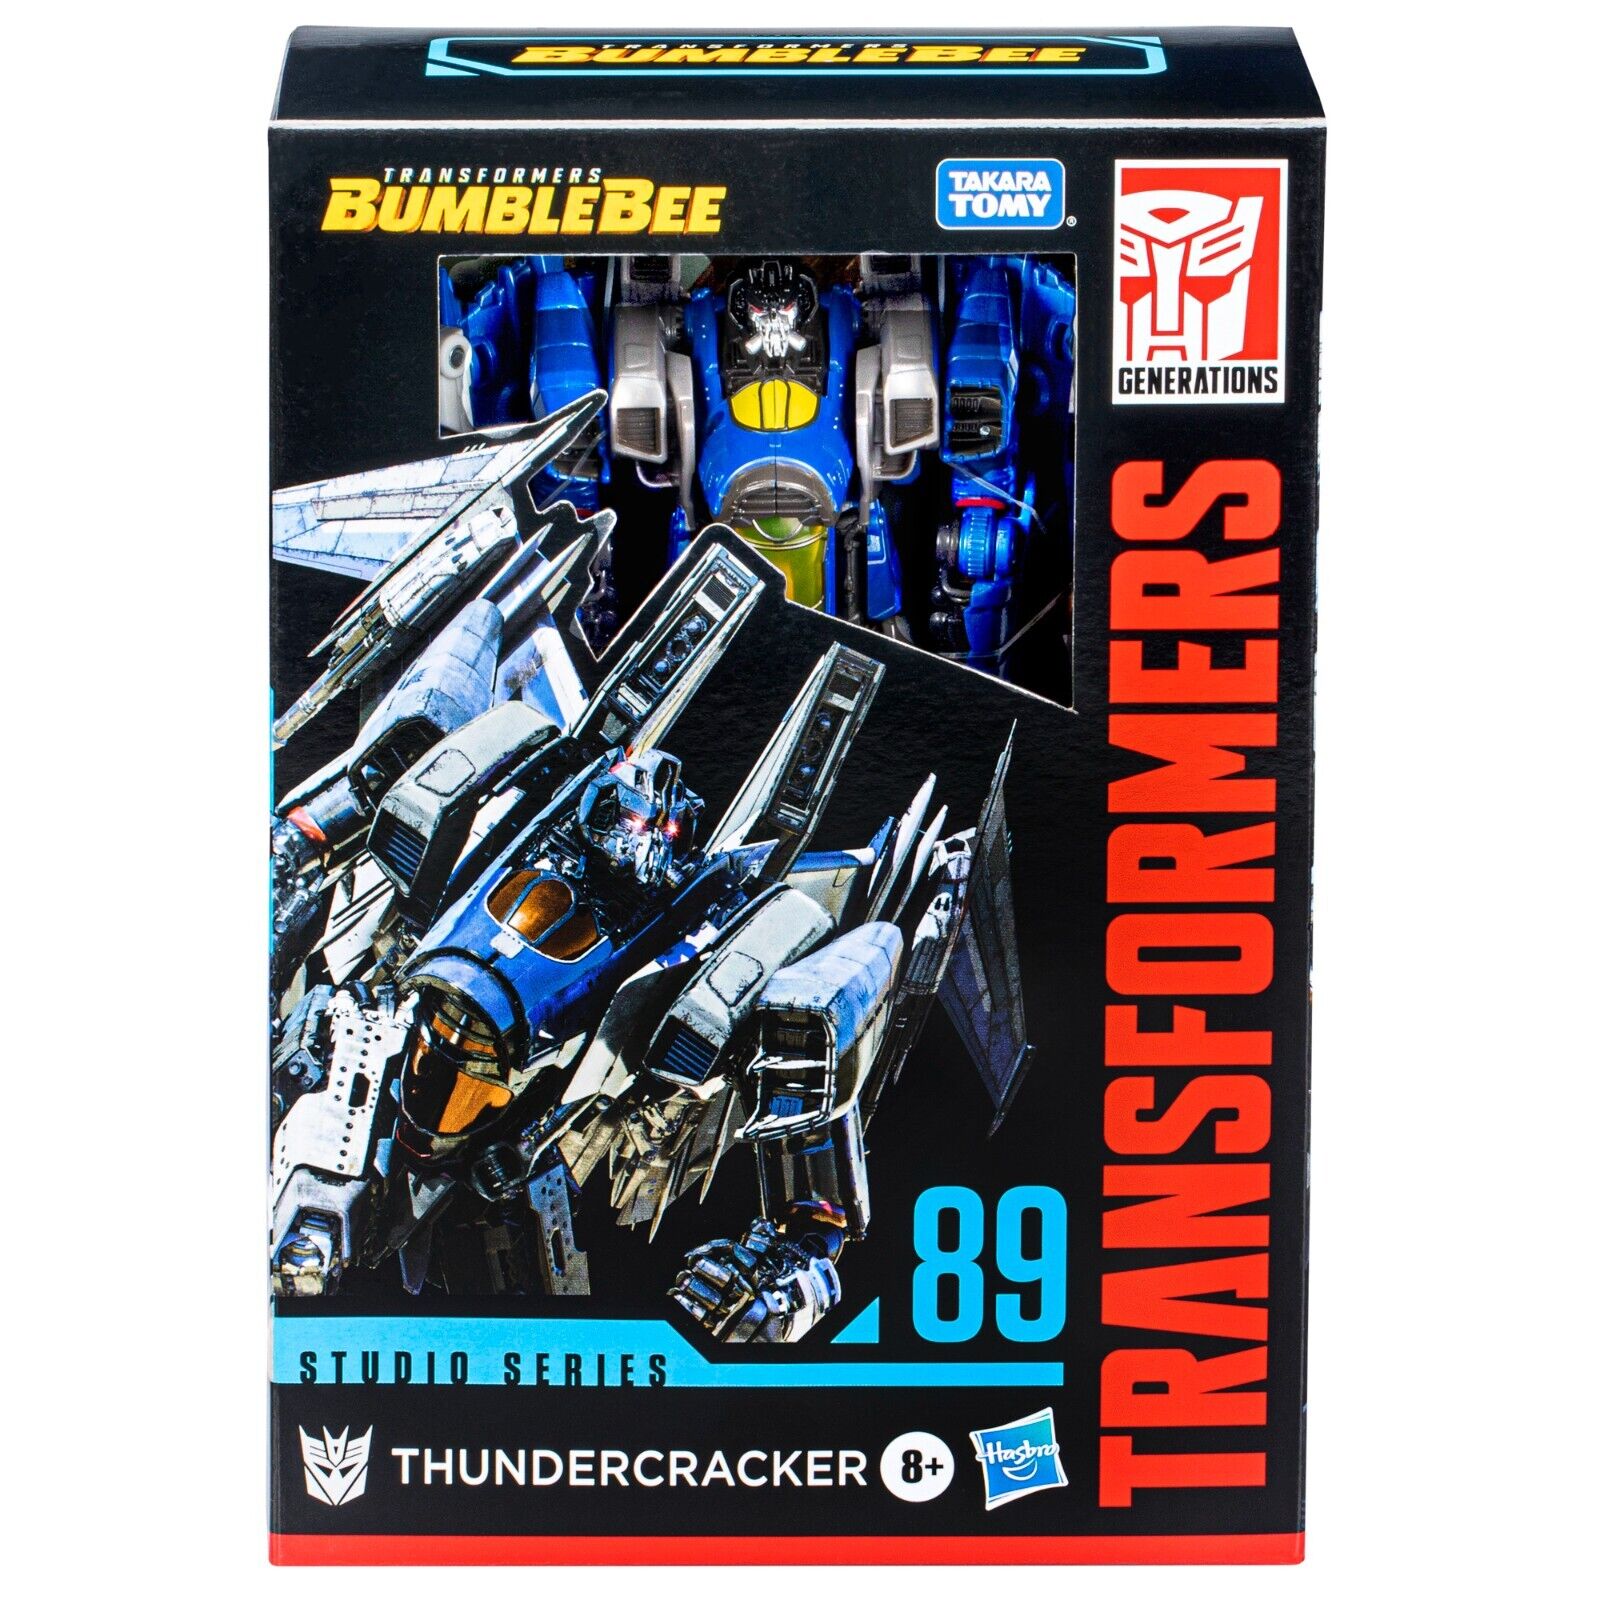 Transformers Bumblebee Studio Series: Thundercracker Figure